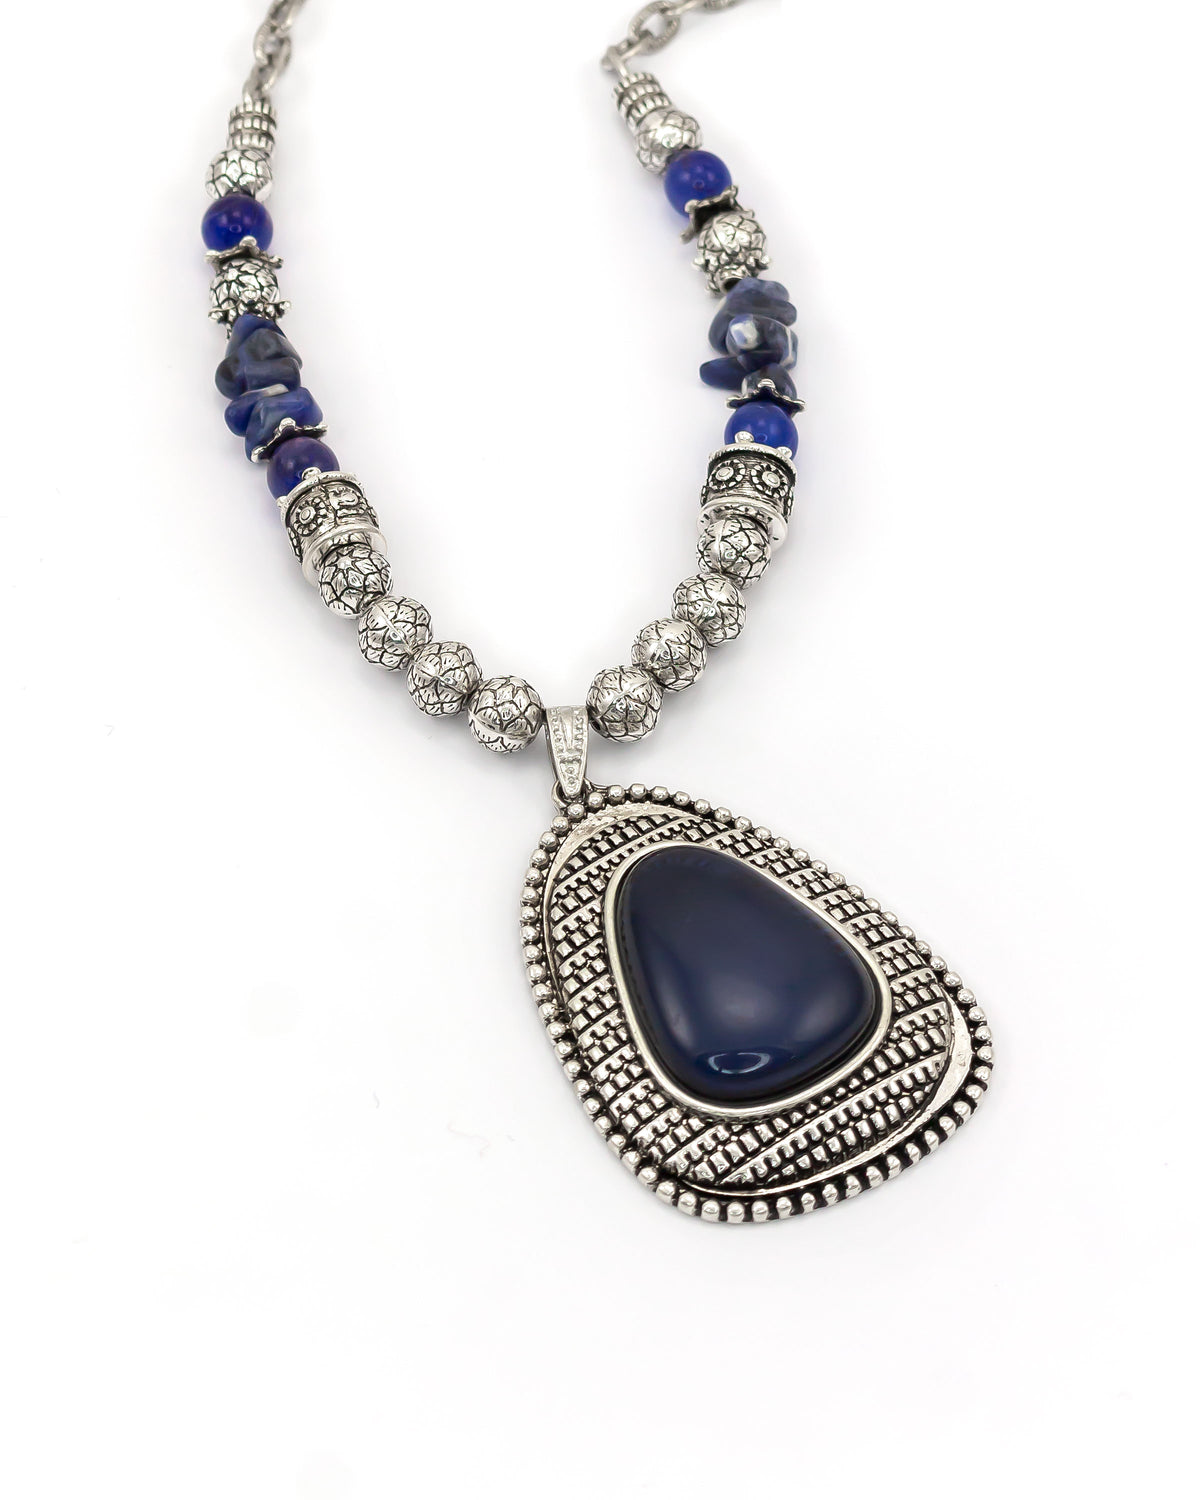 Ruby Rd. - Blue Teardrop Pendant Necklace